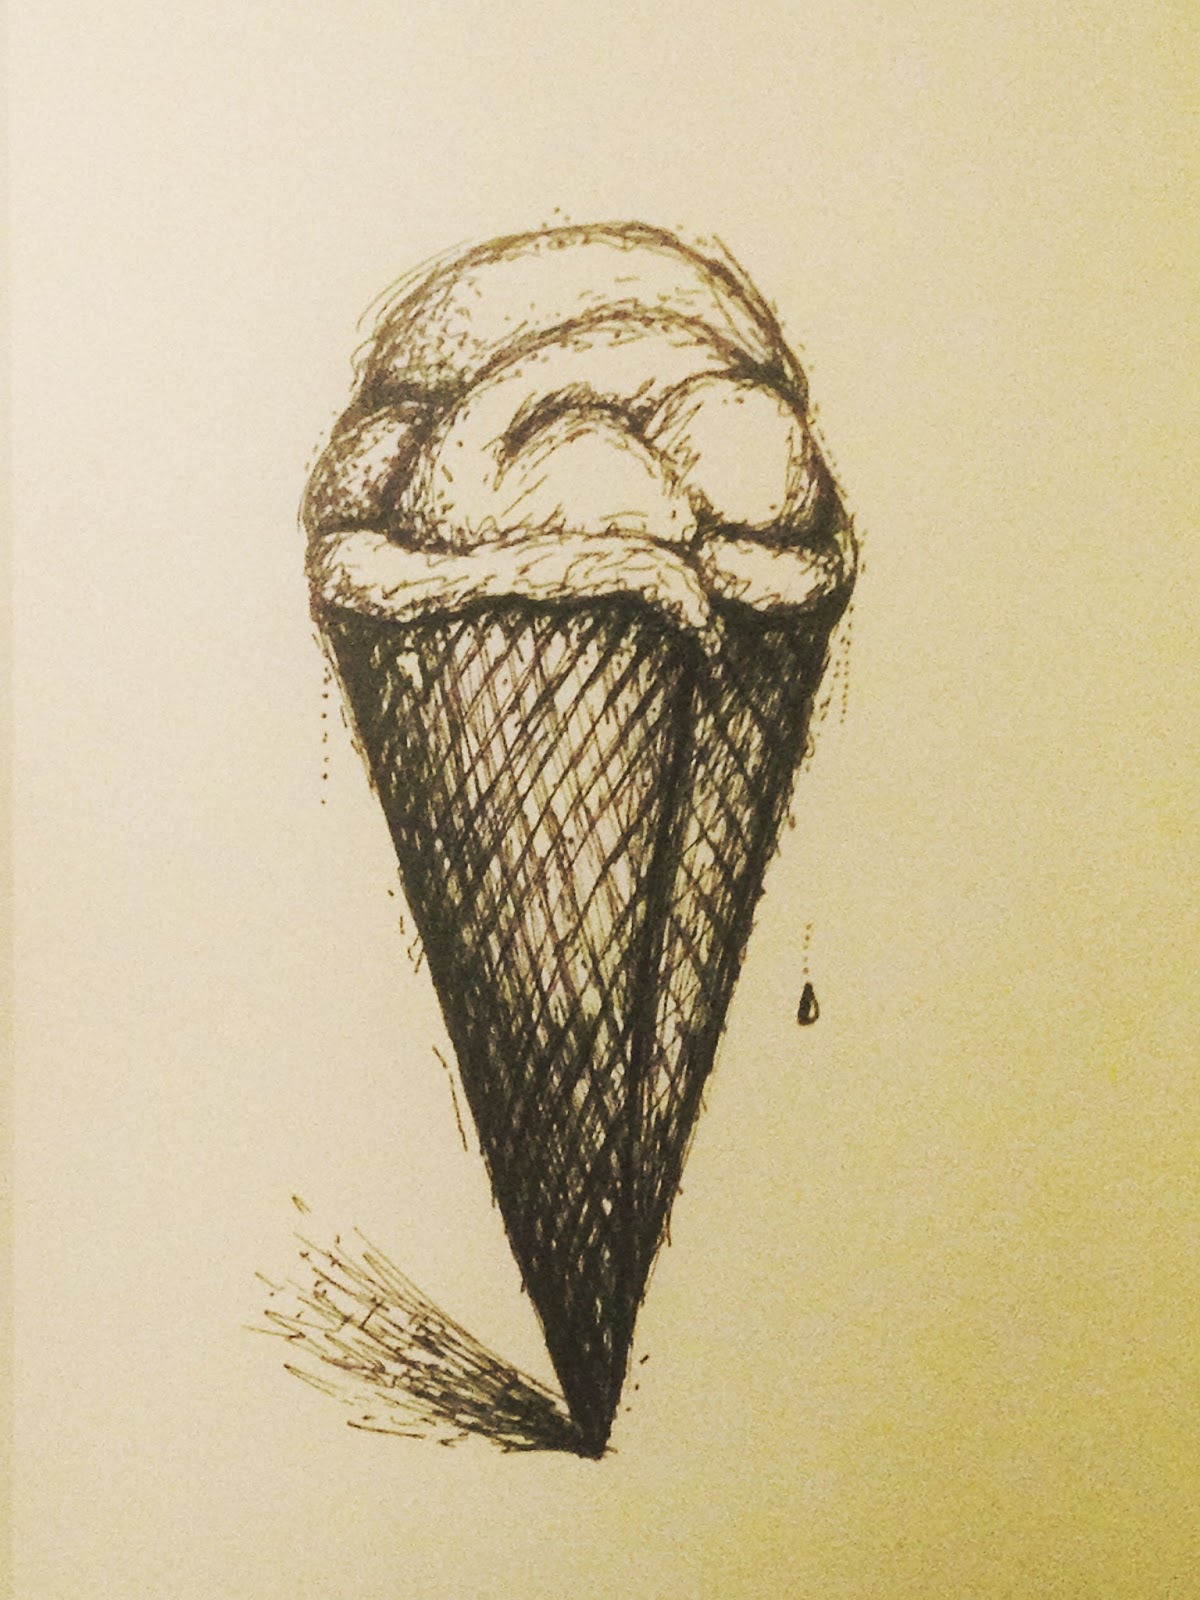 yarska: ice cream cone.